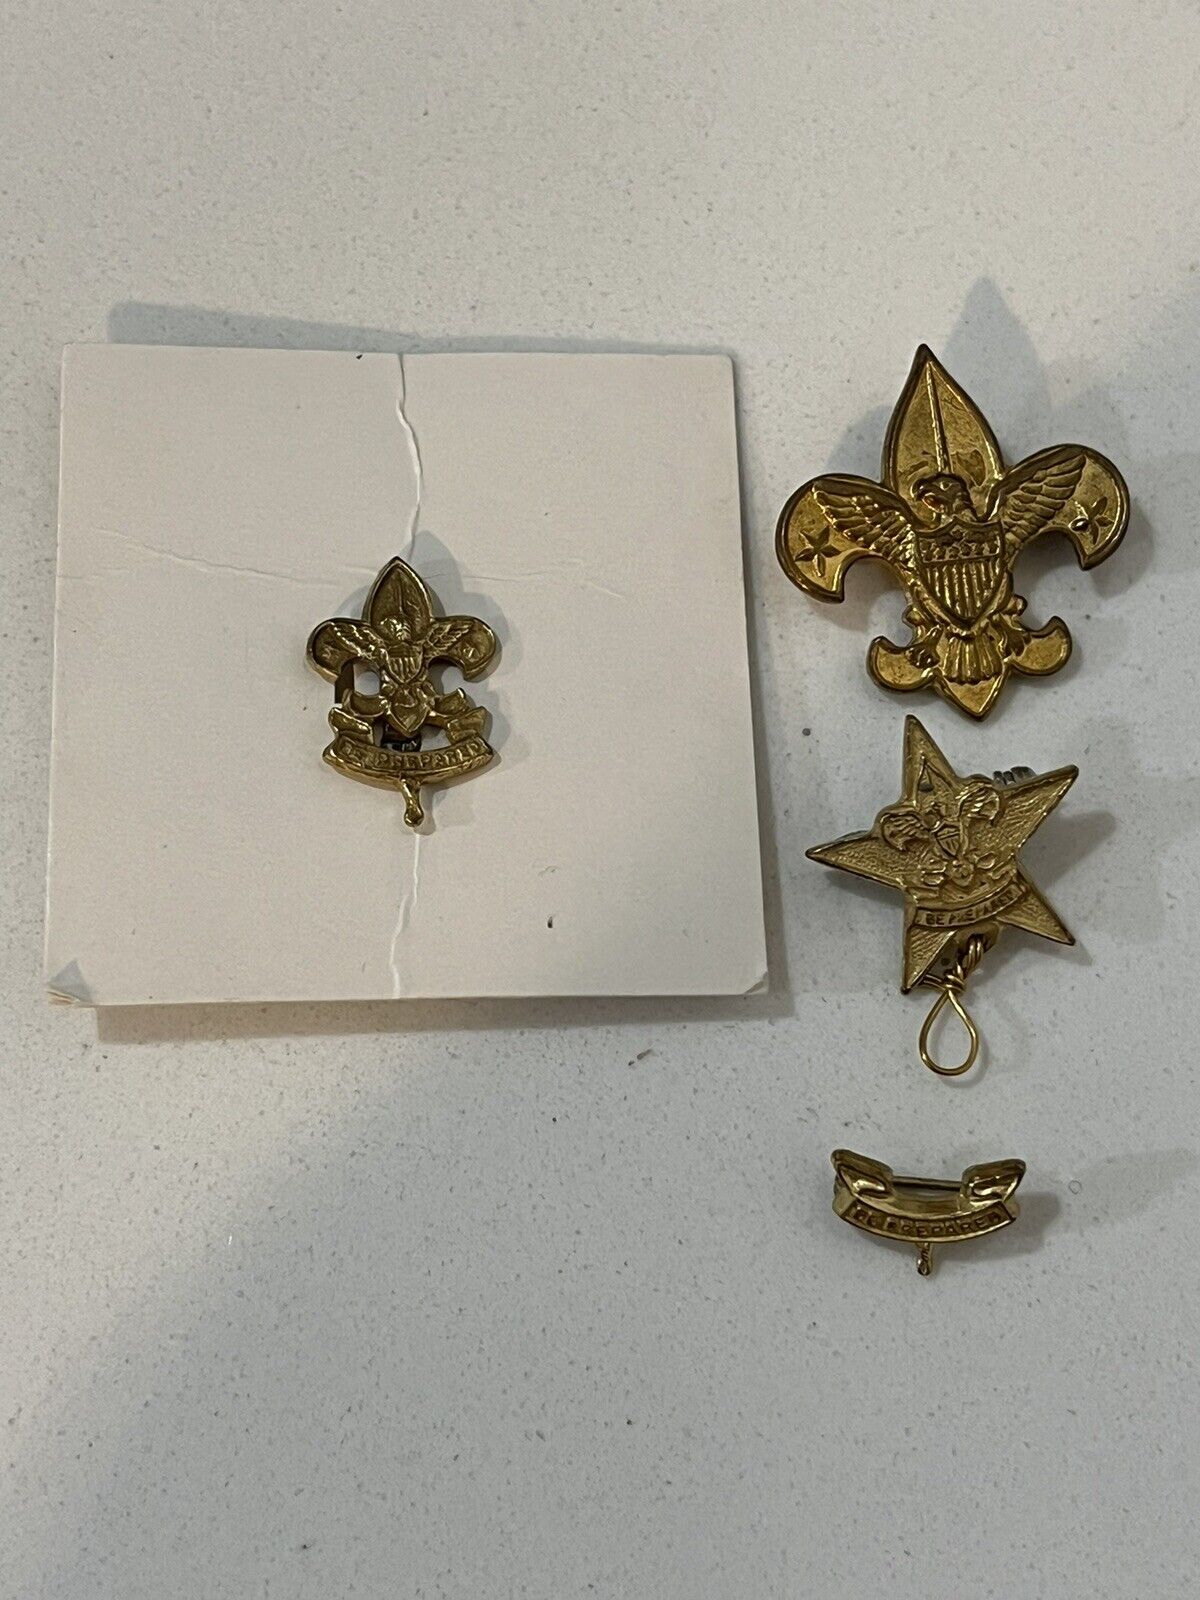 4 Vintage Boy Scout Pin Lot / BSA Be Prepared Boy Scouts of America